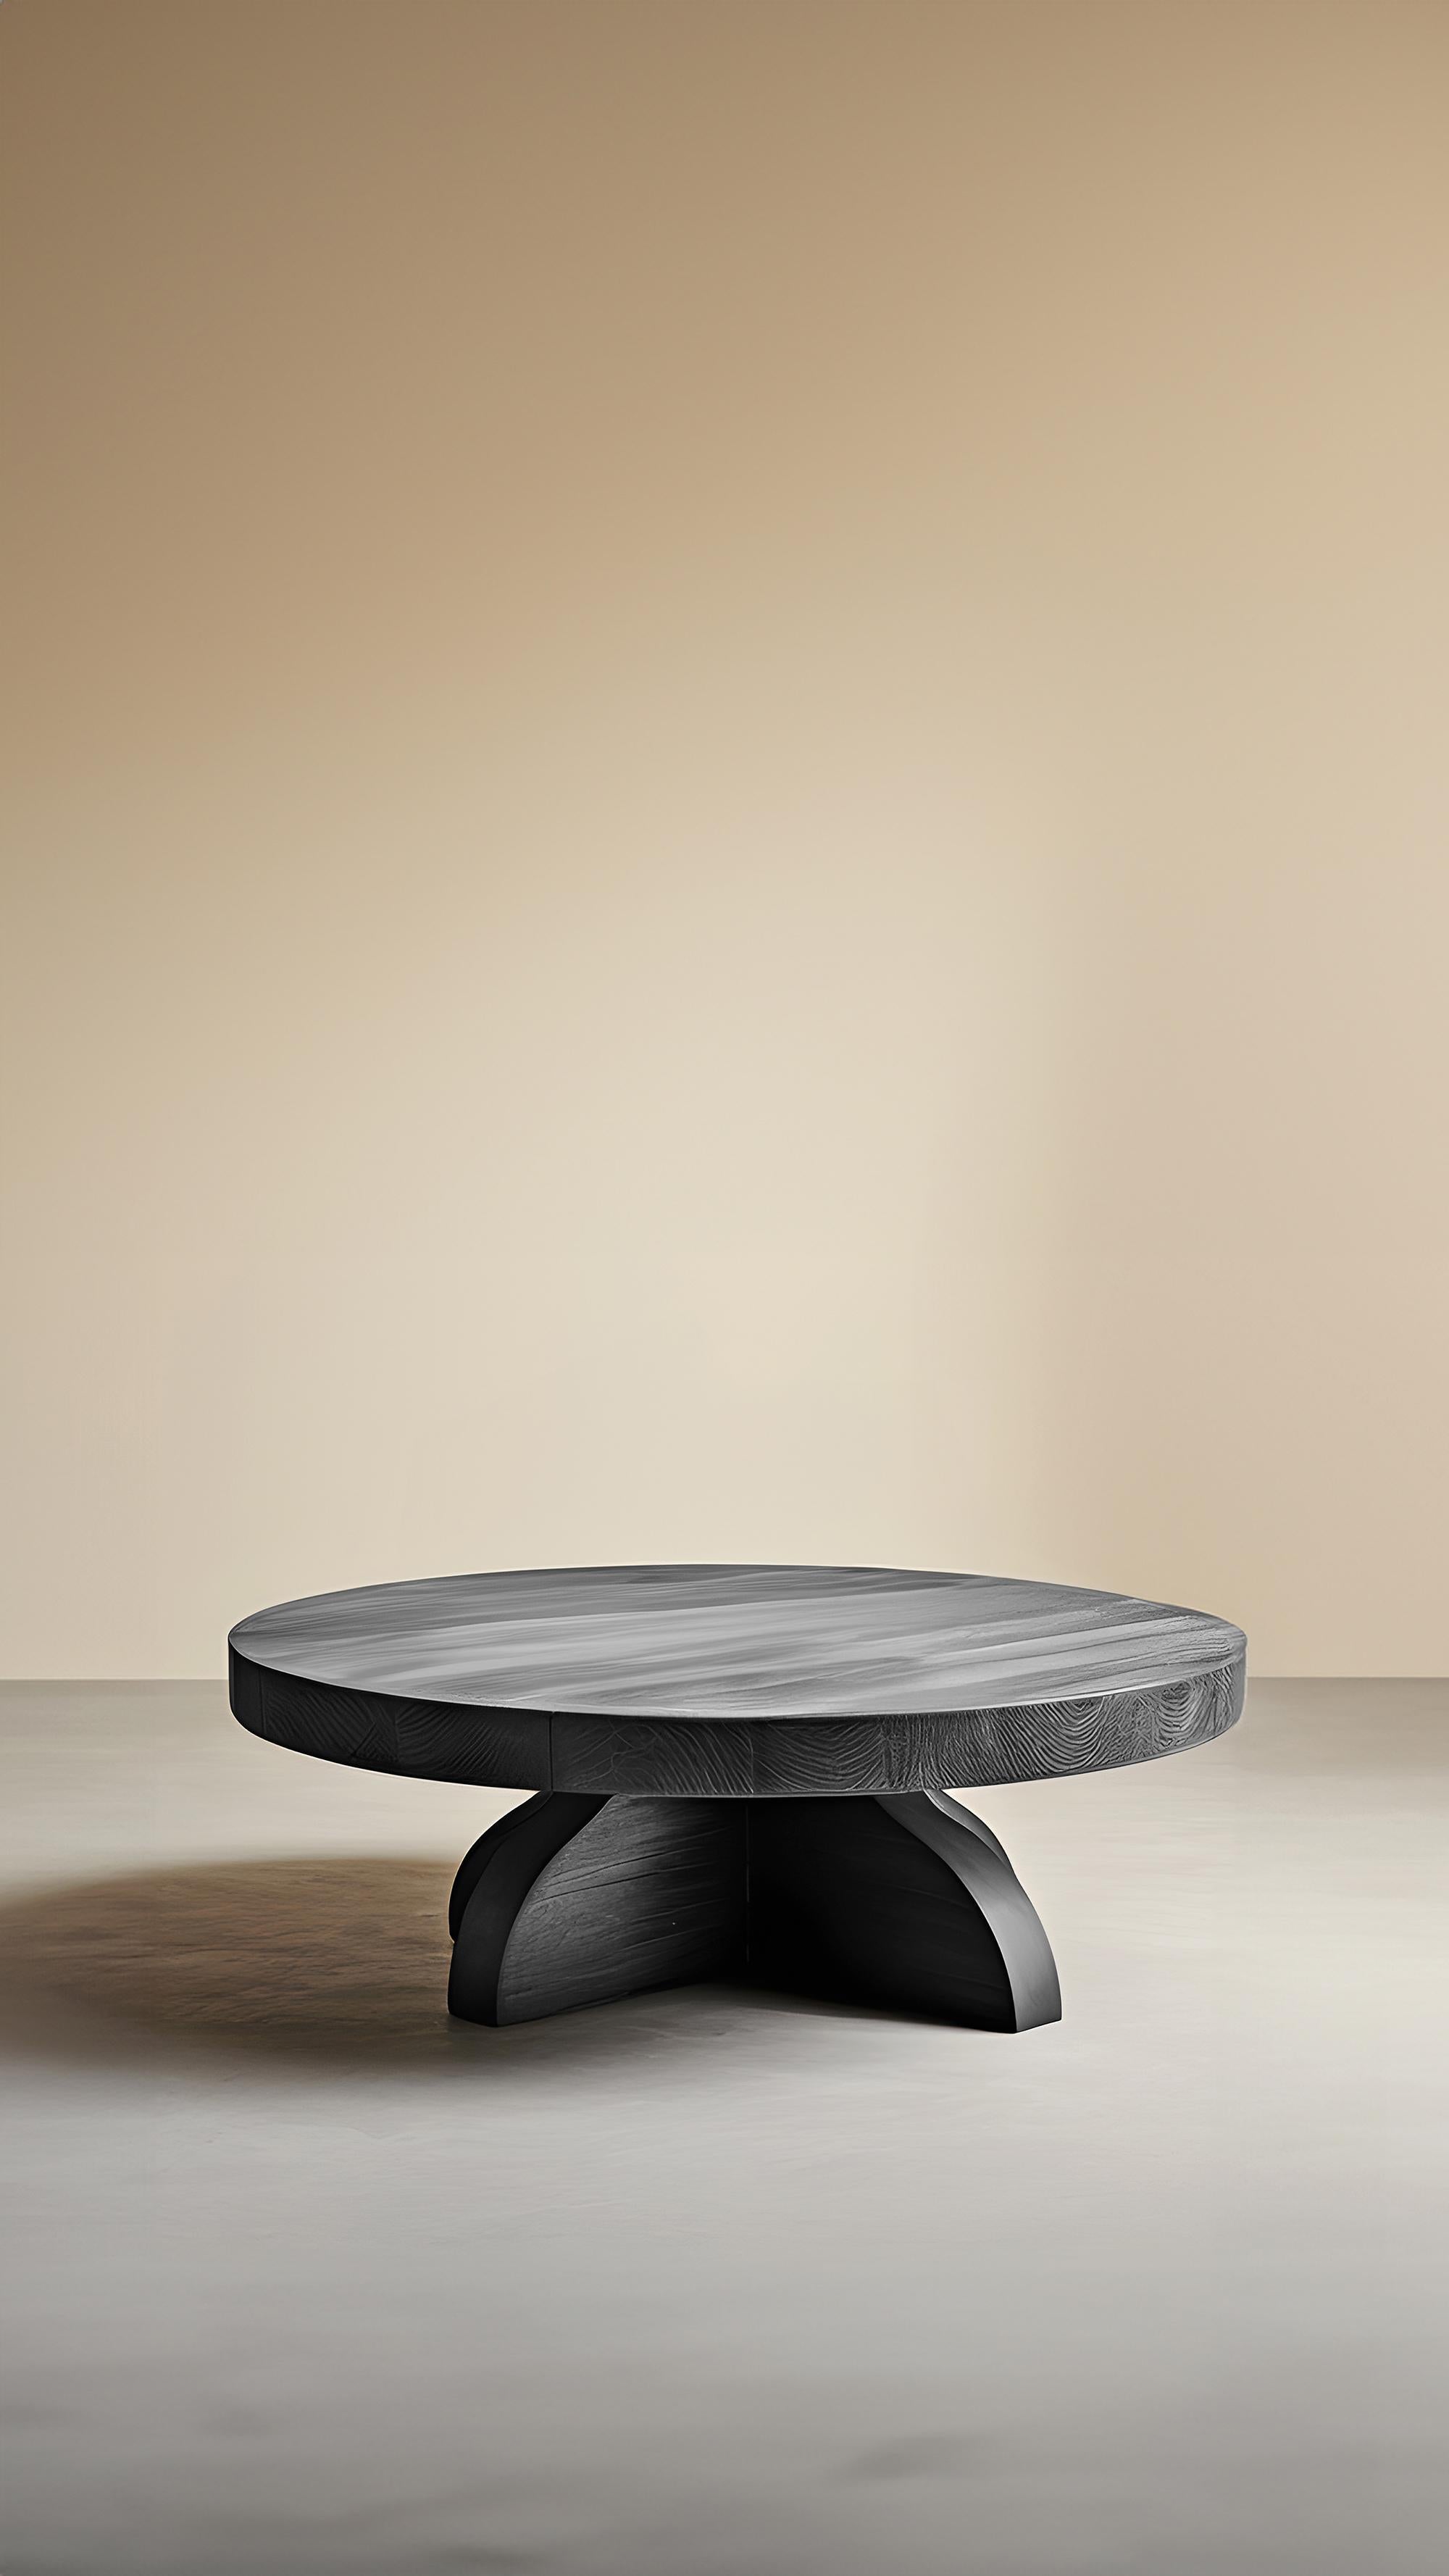 Hardwood Black Fundamenta Abstract Table 57 Contemporary Oak Design by NONO For Sale